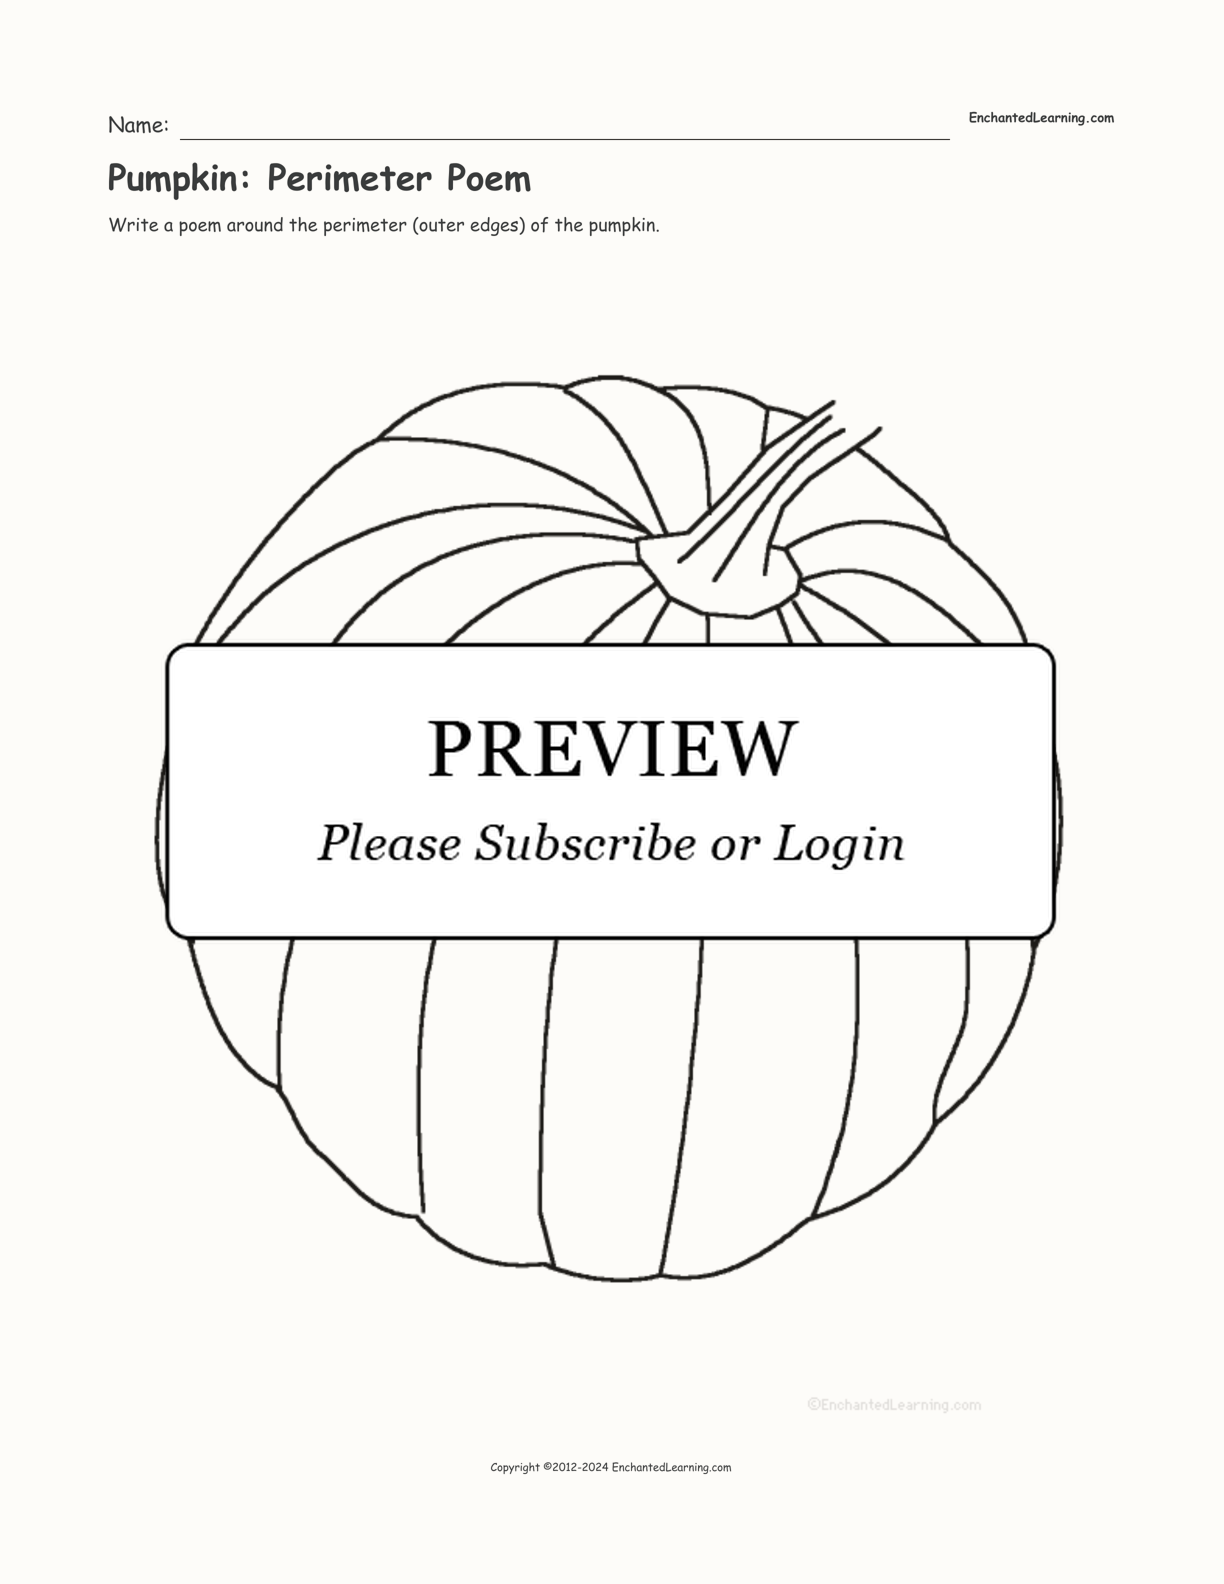 Pumpkin: Perimeter Poem interactive worksheet page 1